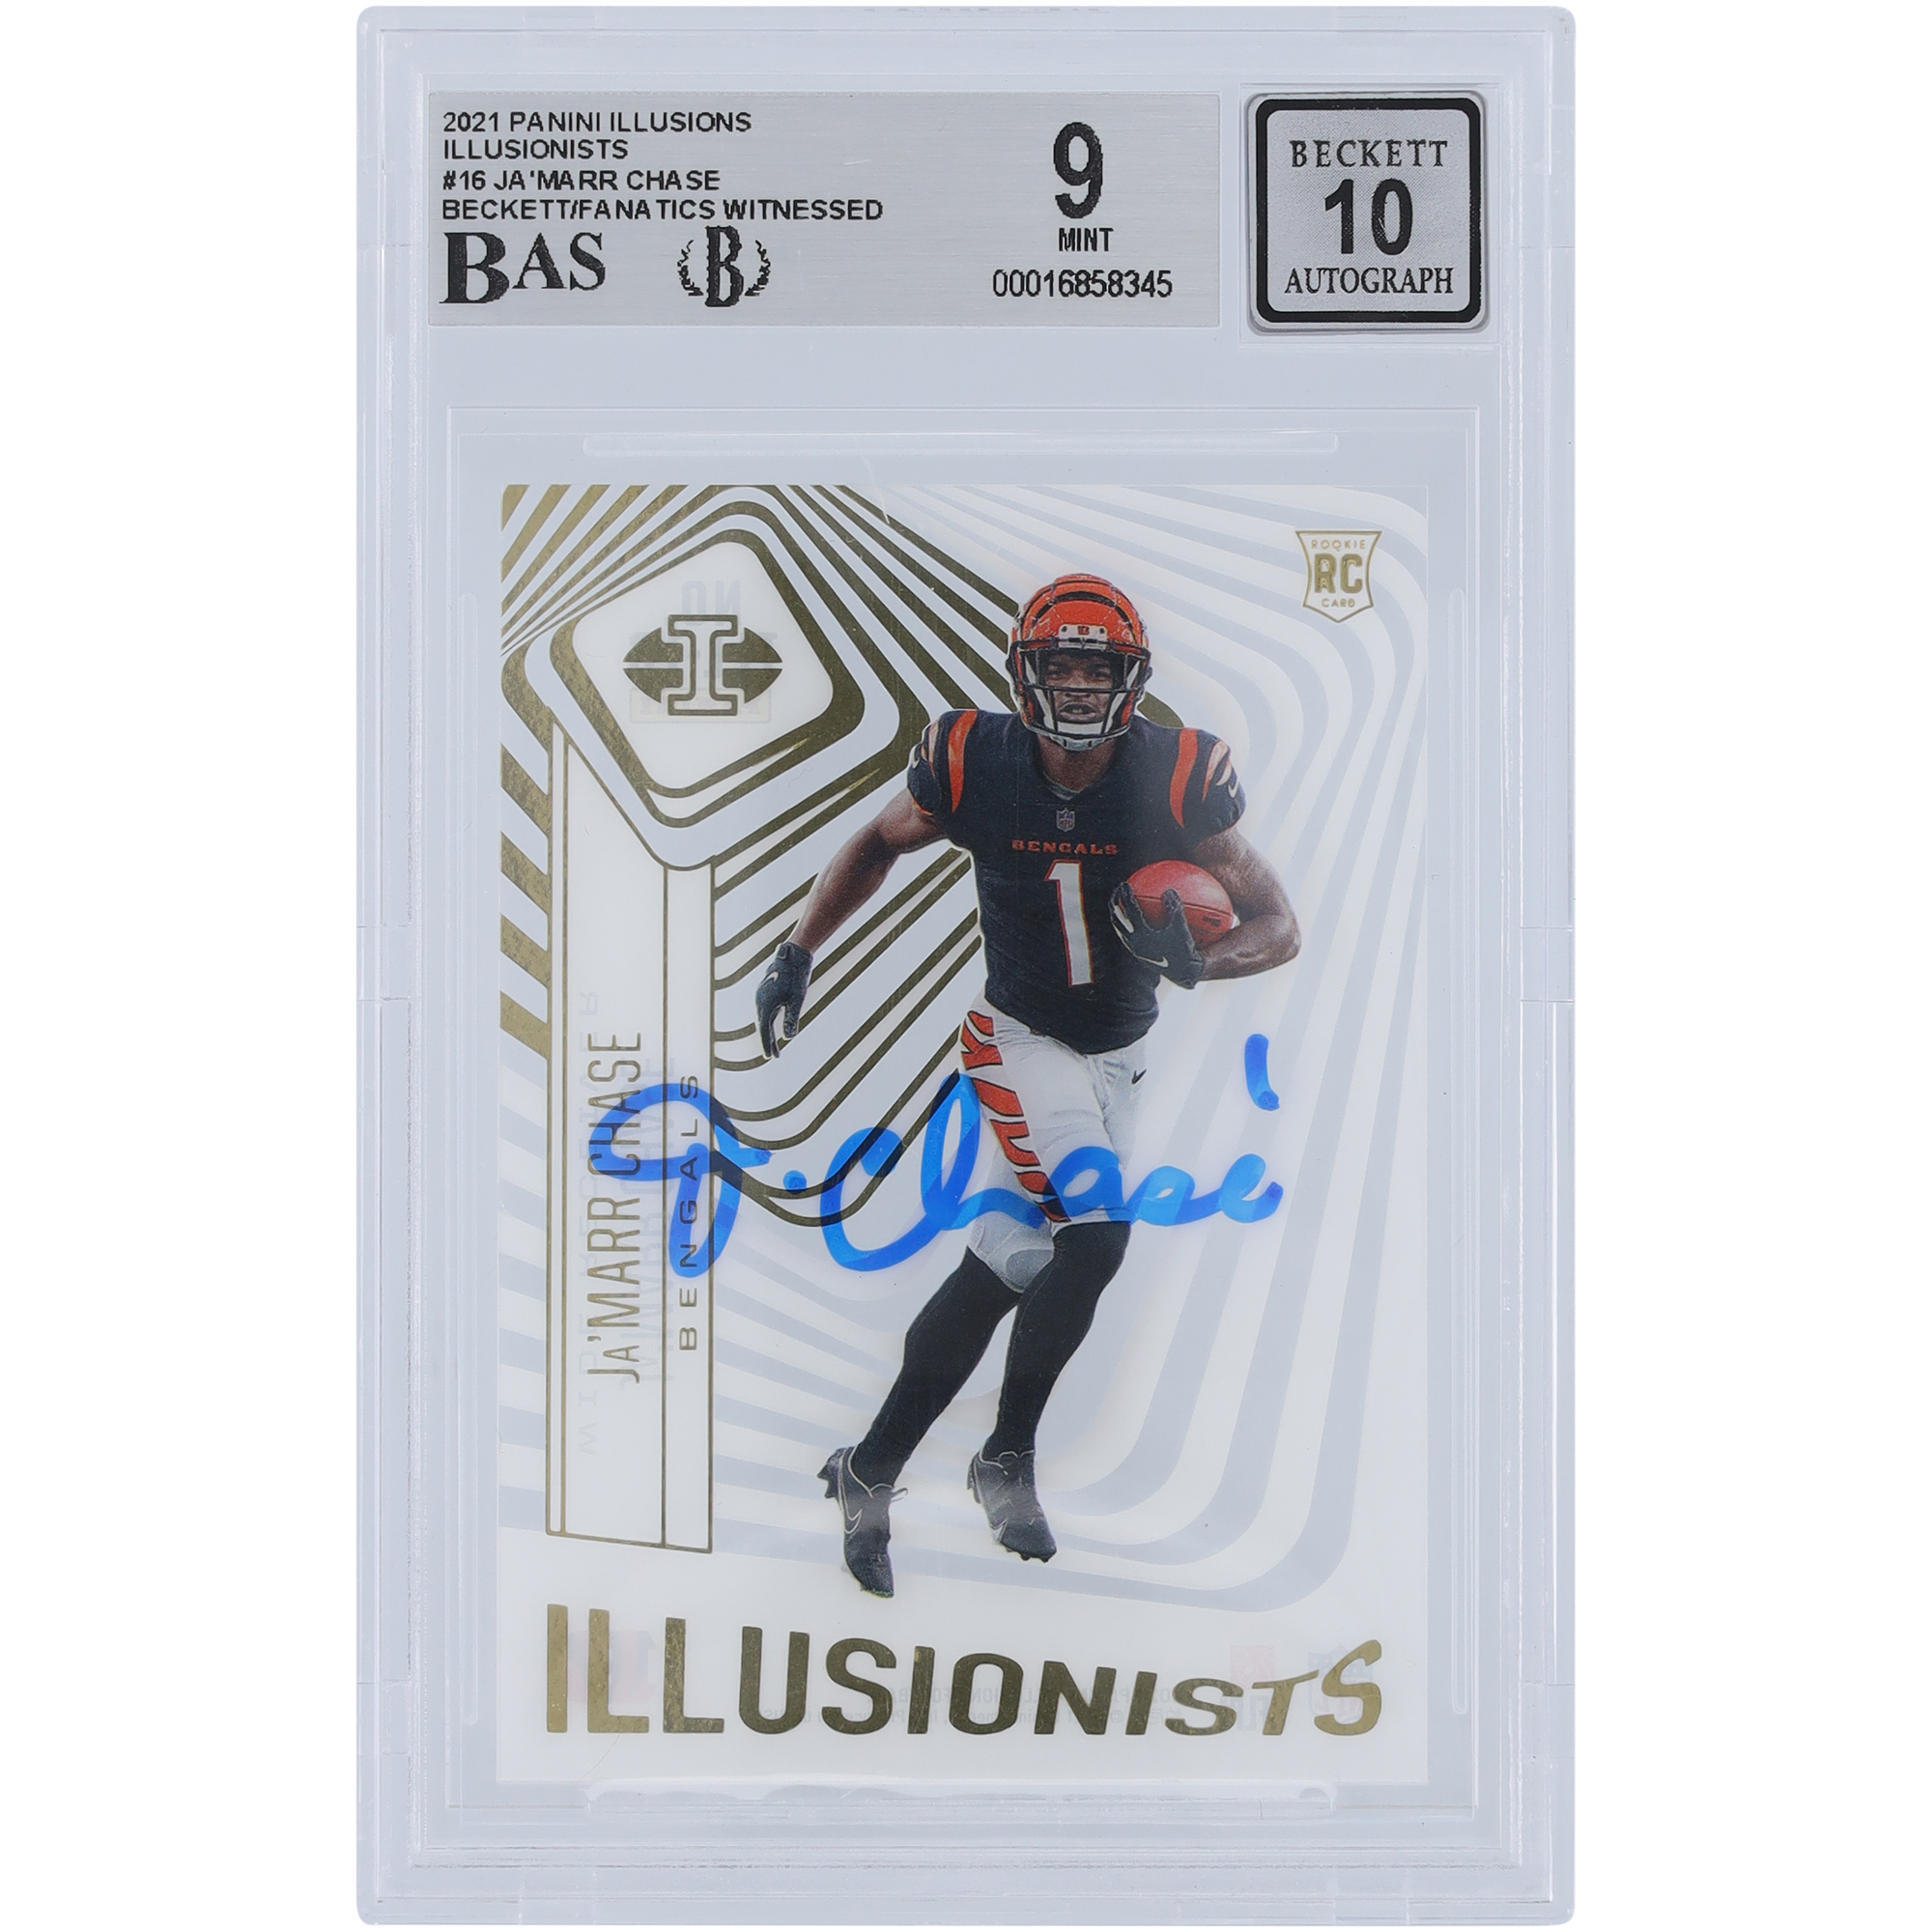 Ja’Marr Chase Cincinnati Bengals signierte 2021 Panini Illusions Illusionists #Ill-16 Beckett Fanatics bezeugte authentifizierte 9/10 Rookie-Karte